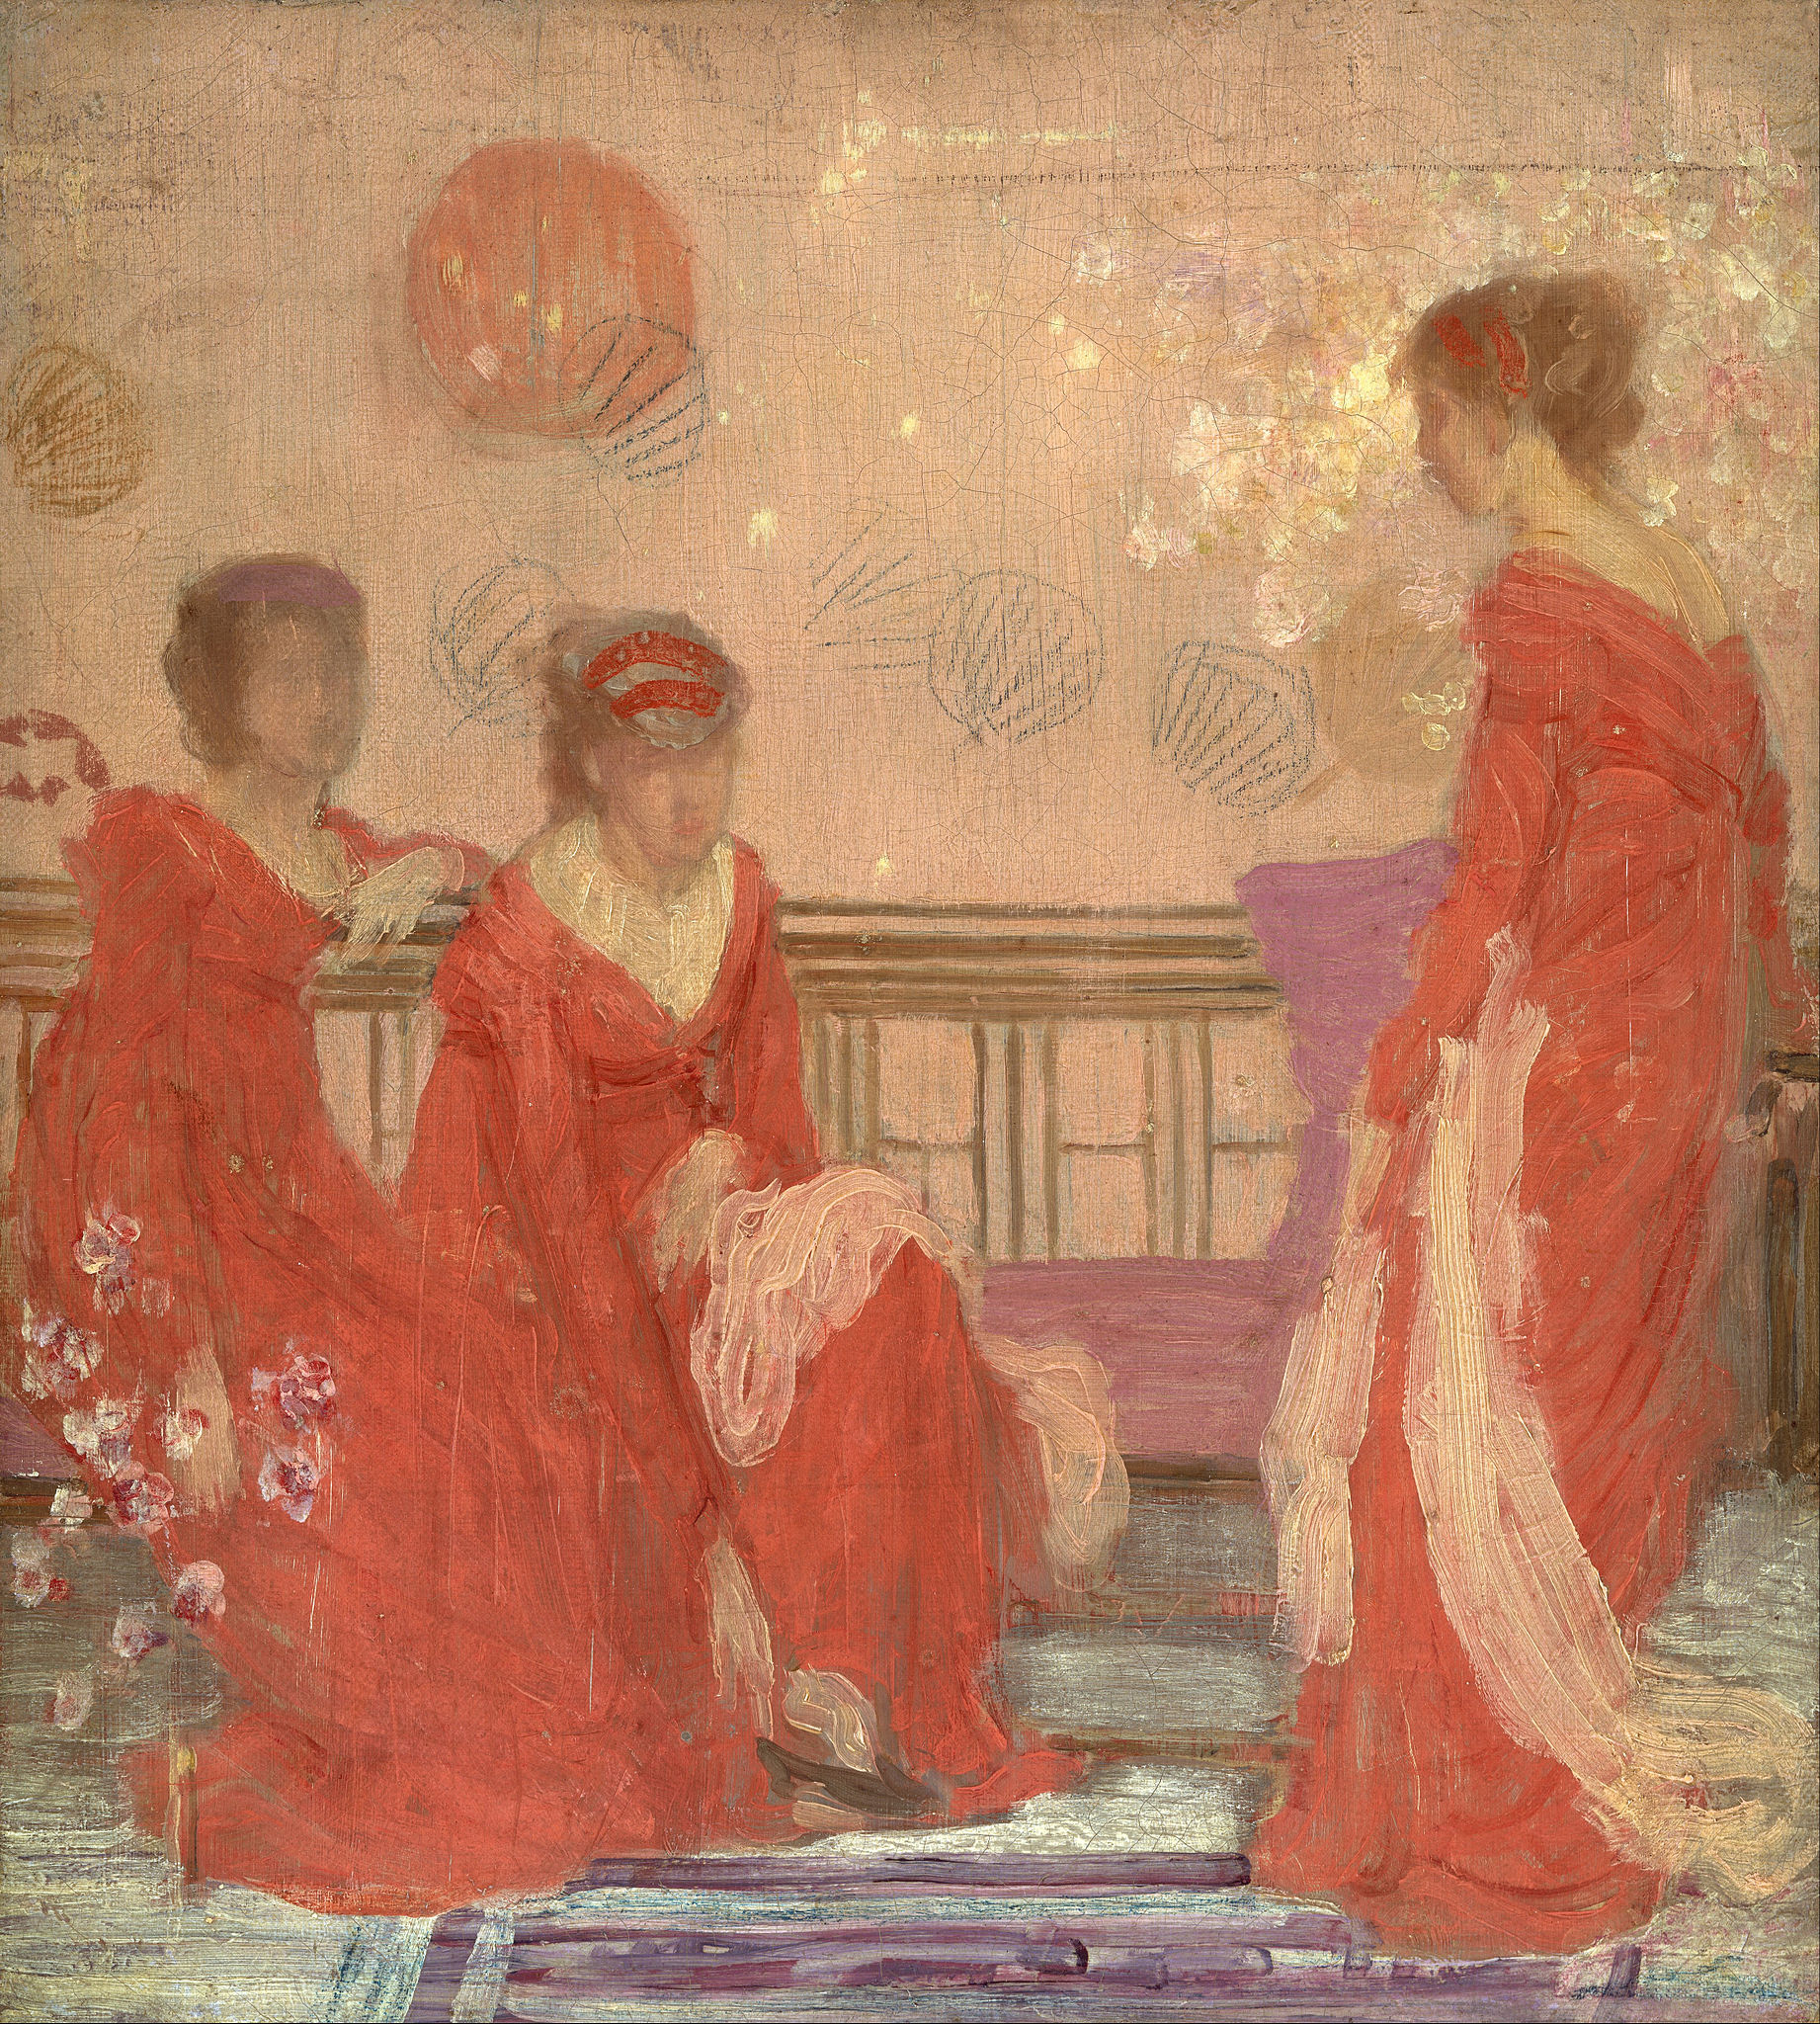 Ten rengi ve Kırmızının Harmonisi by James Abbott McNeill Whistler - about 1869 